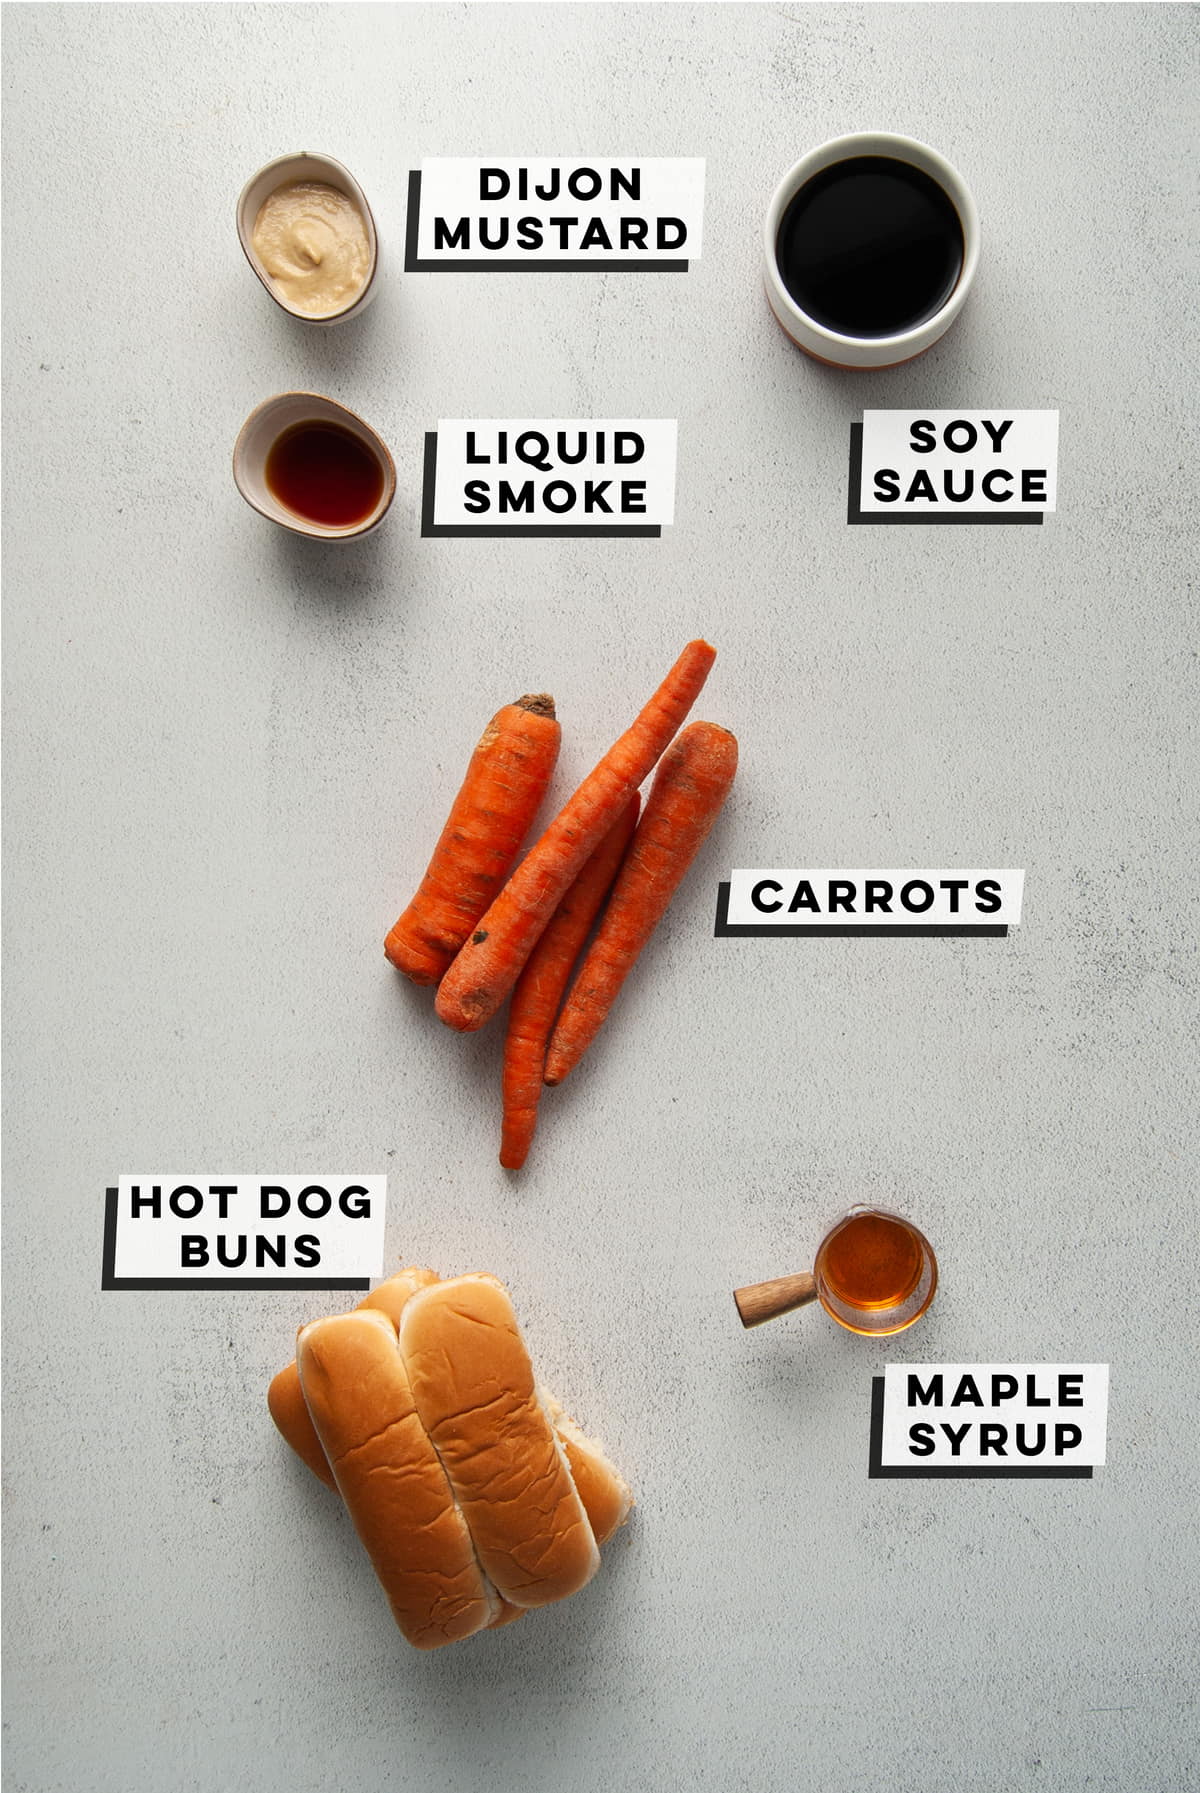 dijon mustard, soy sauce, liquid smoke, carrots, maple syrup, and hot dog buns